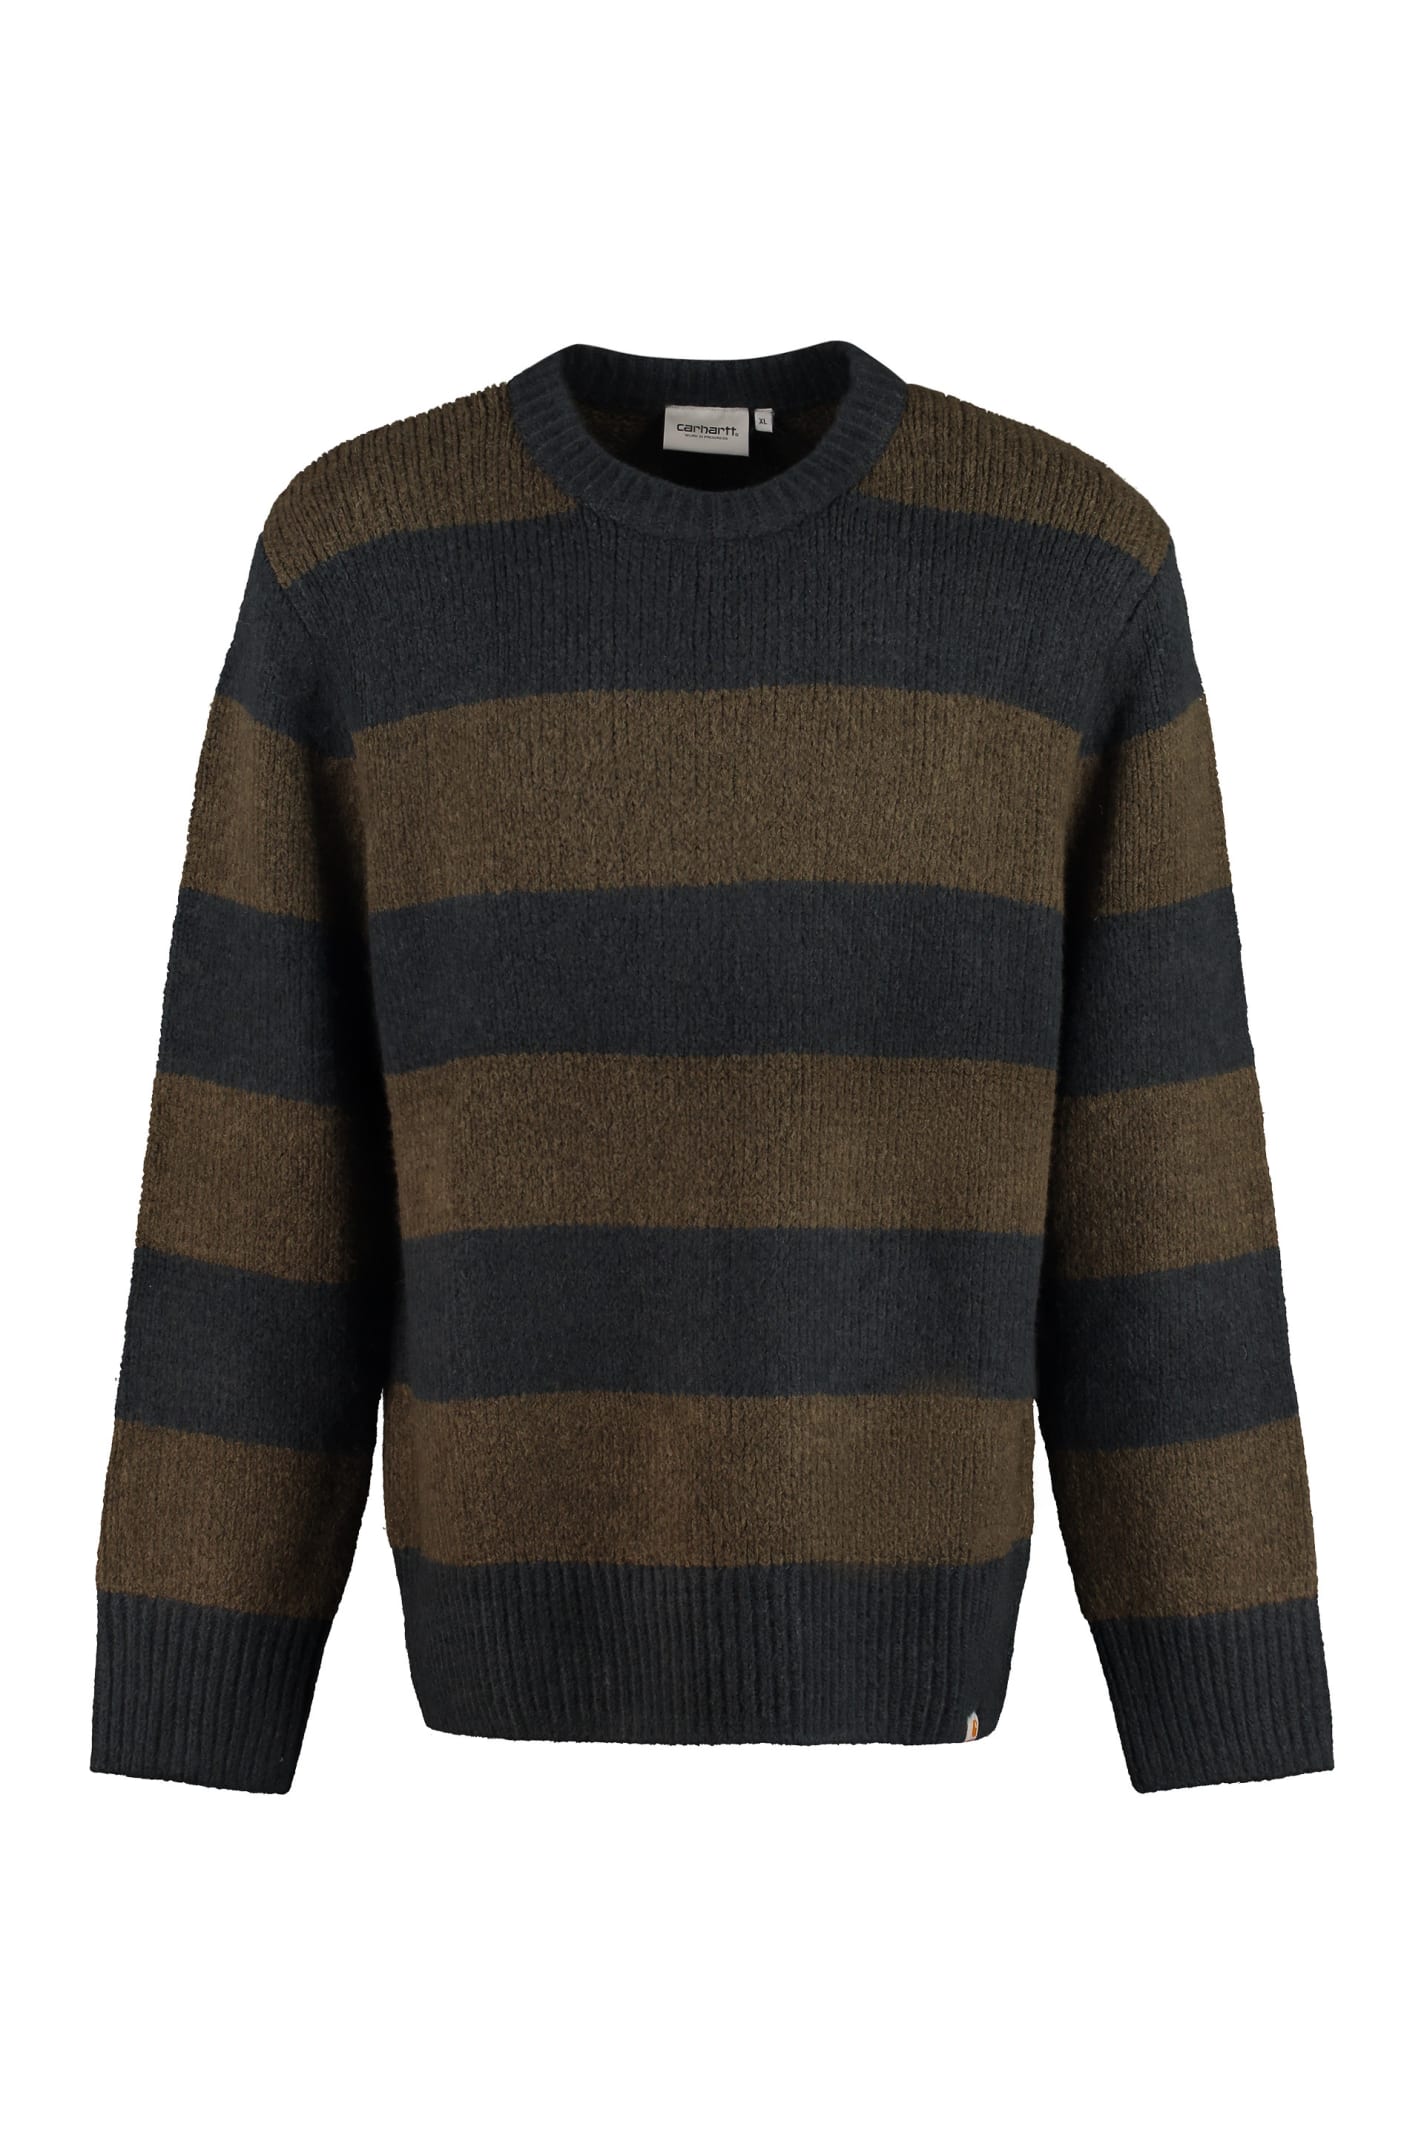 Carhartt Alvin Long Sleeve Crew-neck Sweater